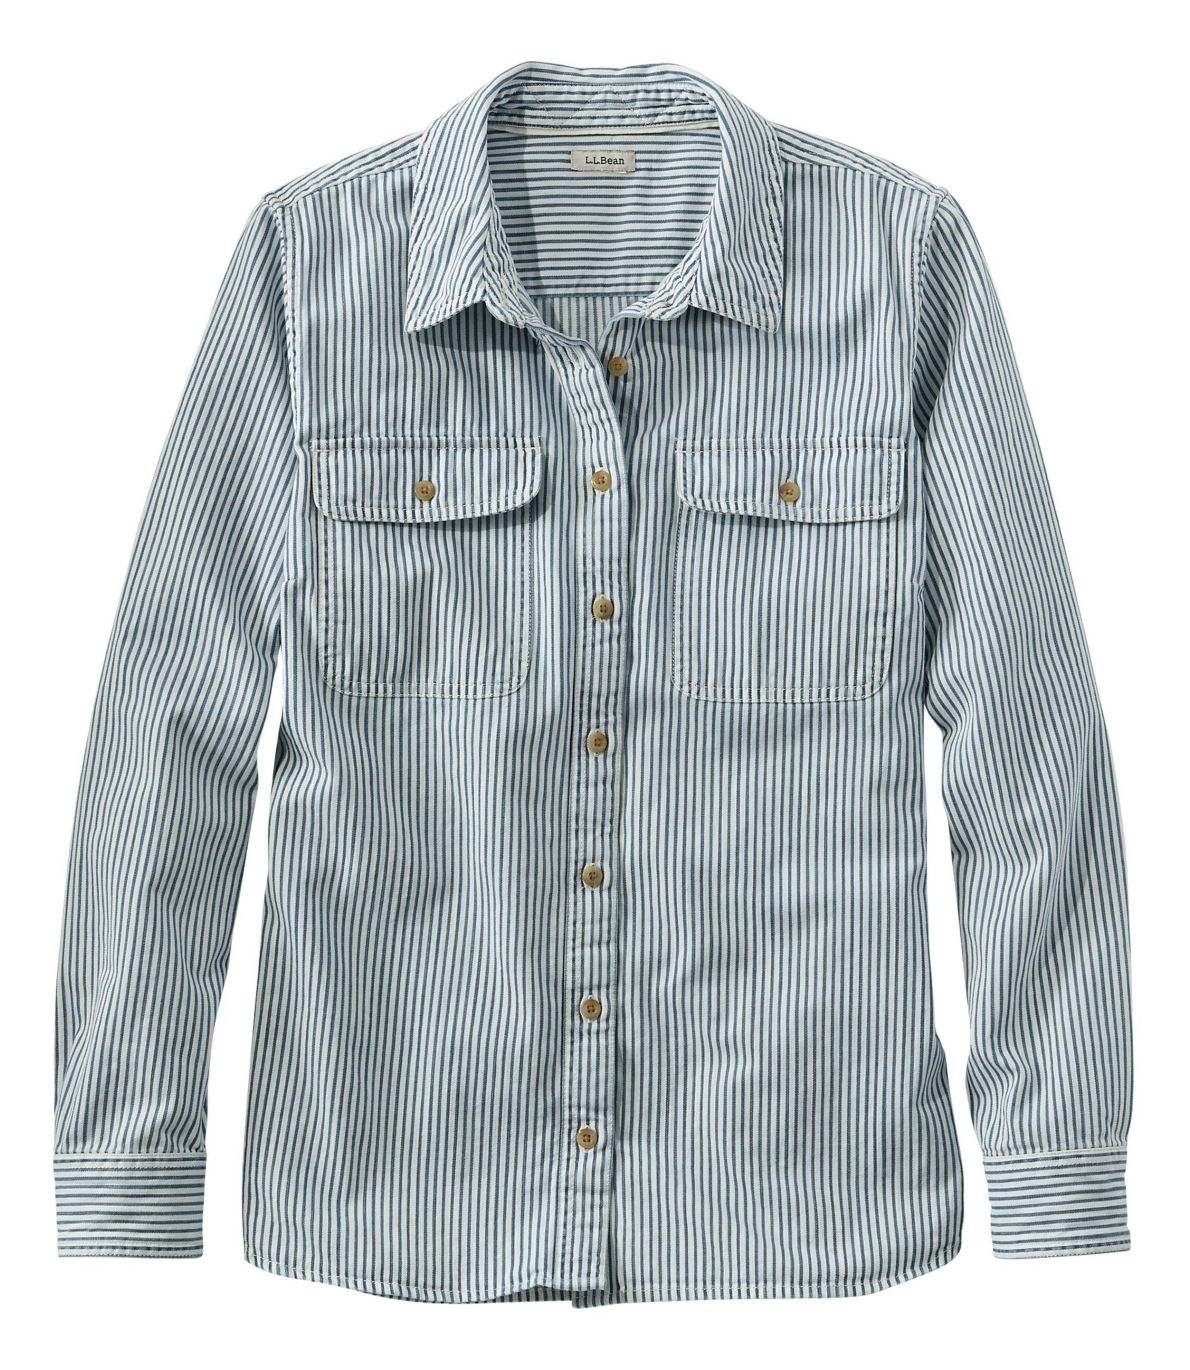 L.L. Bean Heritage Washed Denim Shirt, Long-Sleeve Stripe